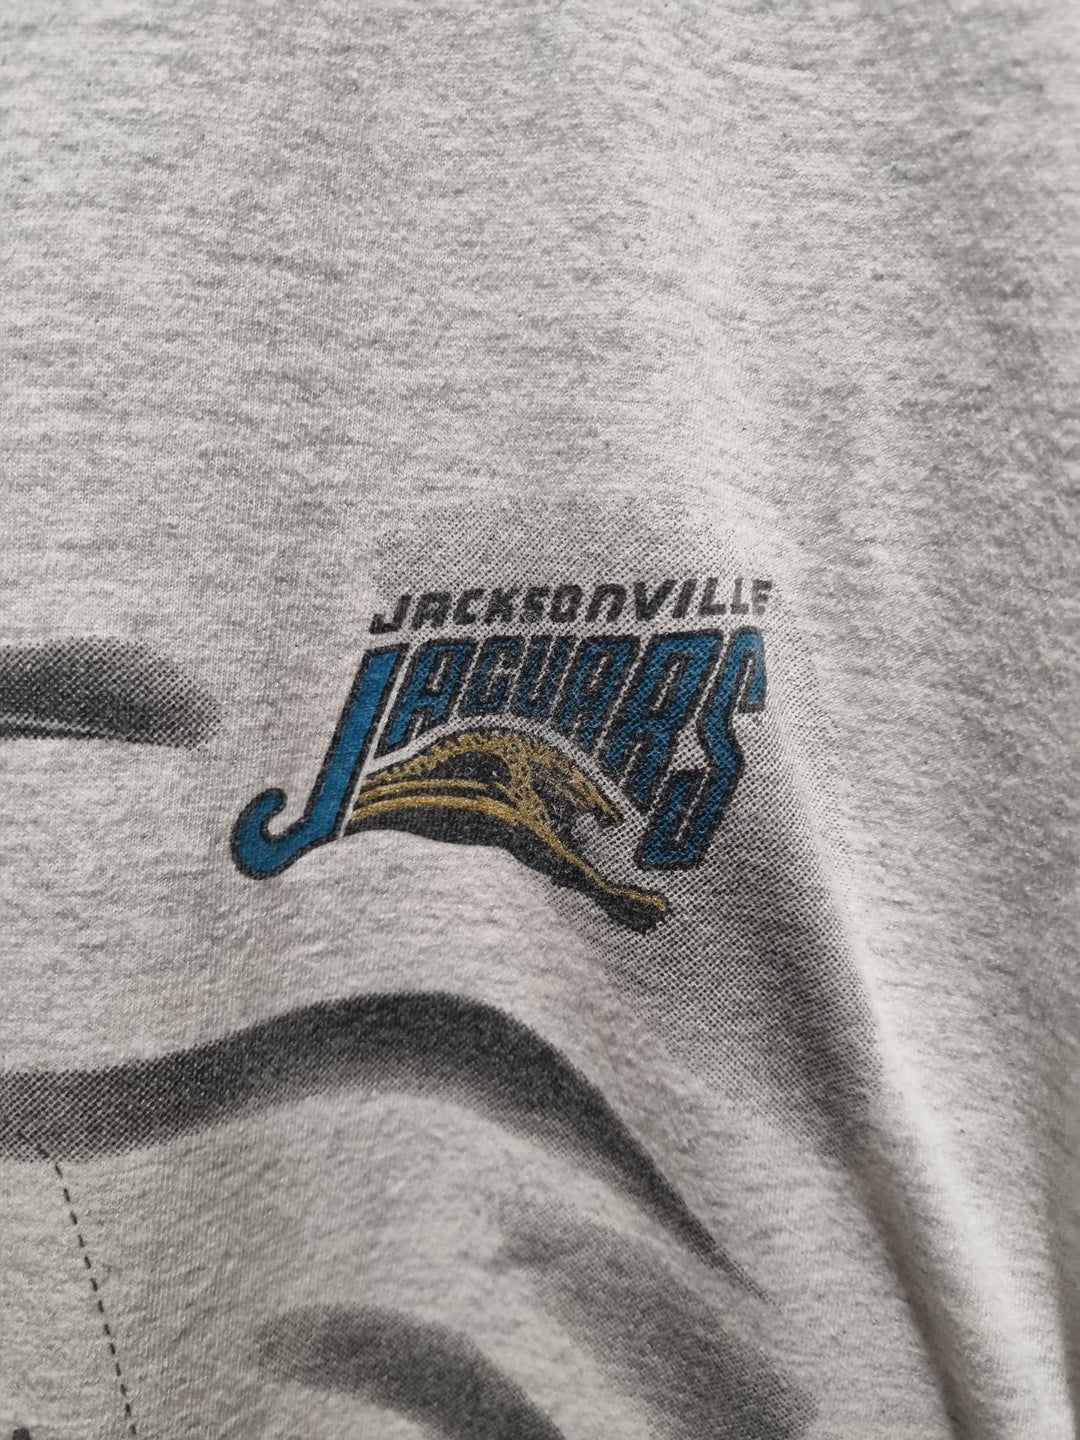 Jacksonville Jaguars Nutmeg NFLP 1994 XL